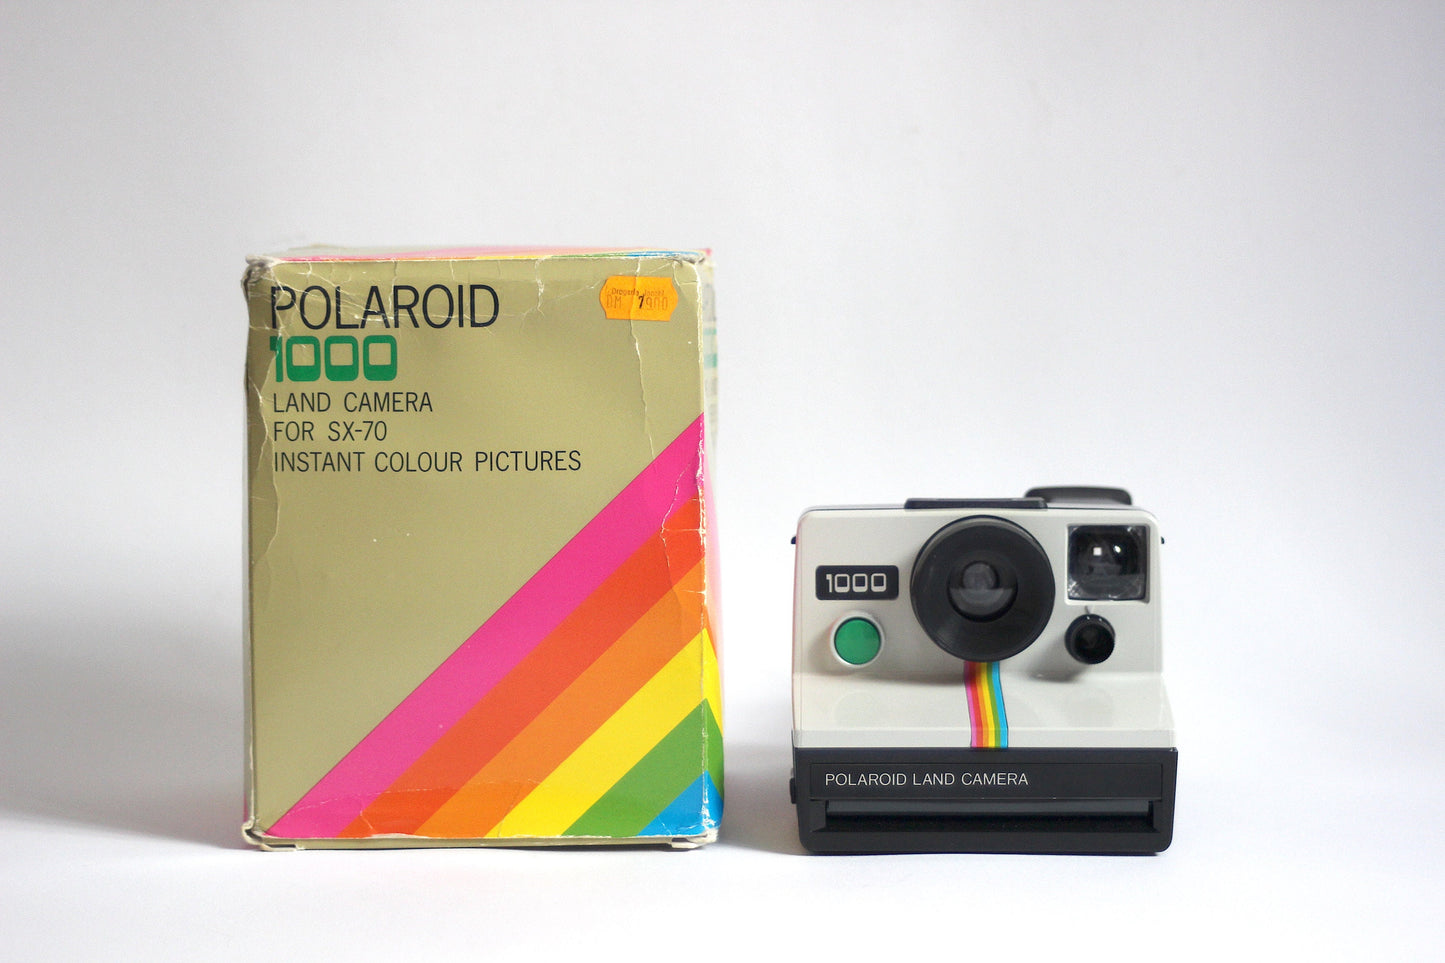 Polaroid 1000 Land Cámera - green shutter button [includes original box and original book instruccions]